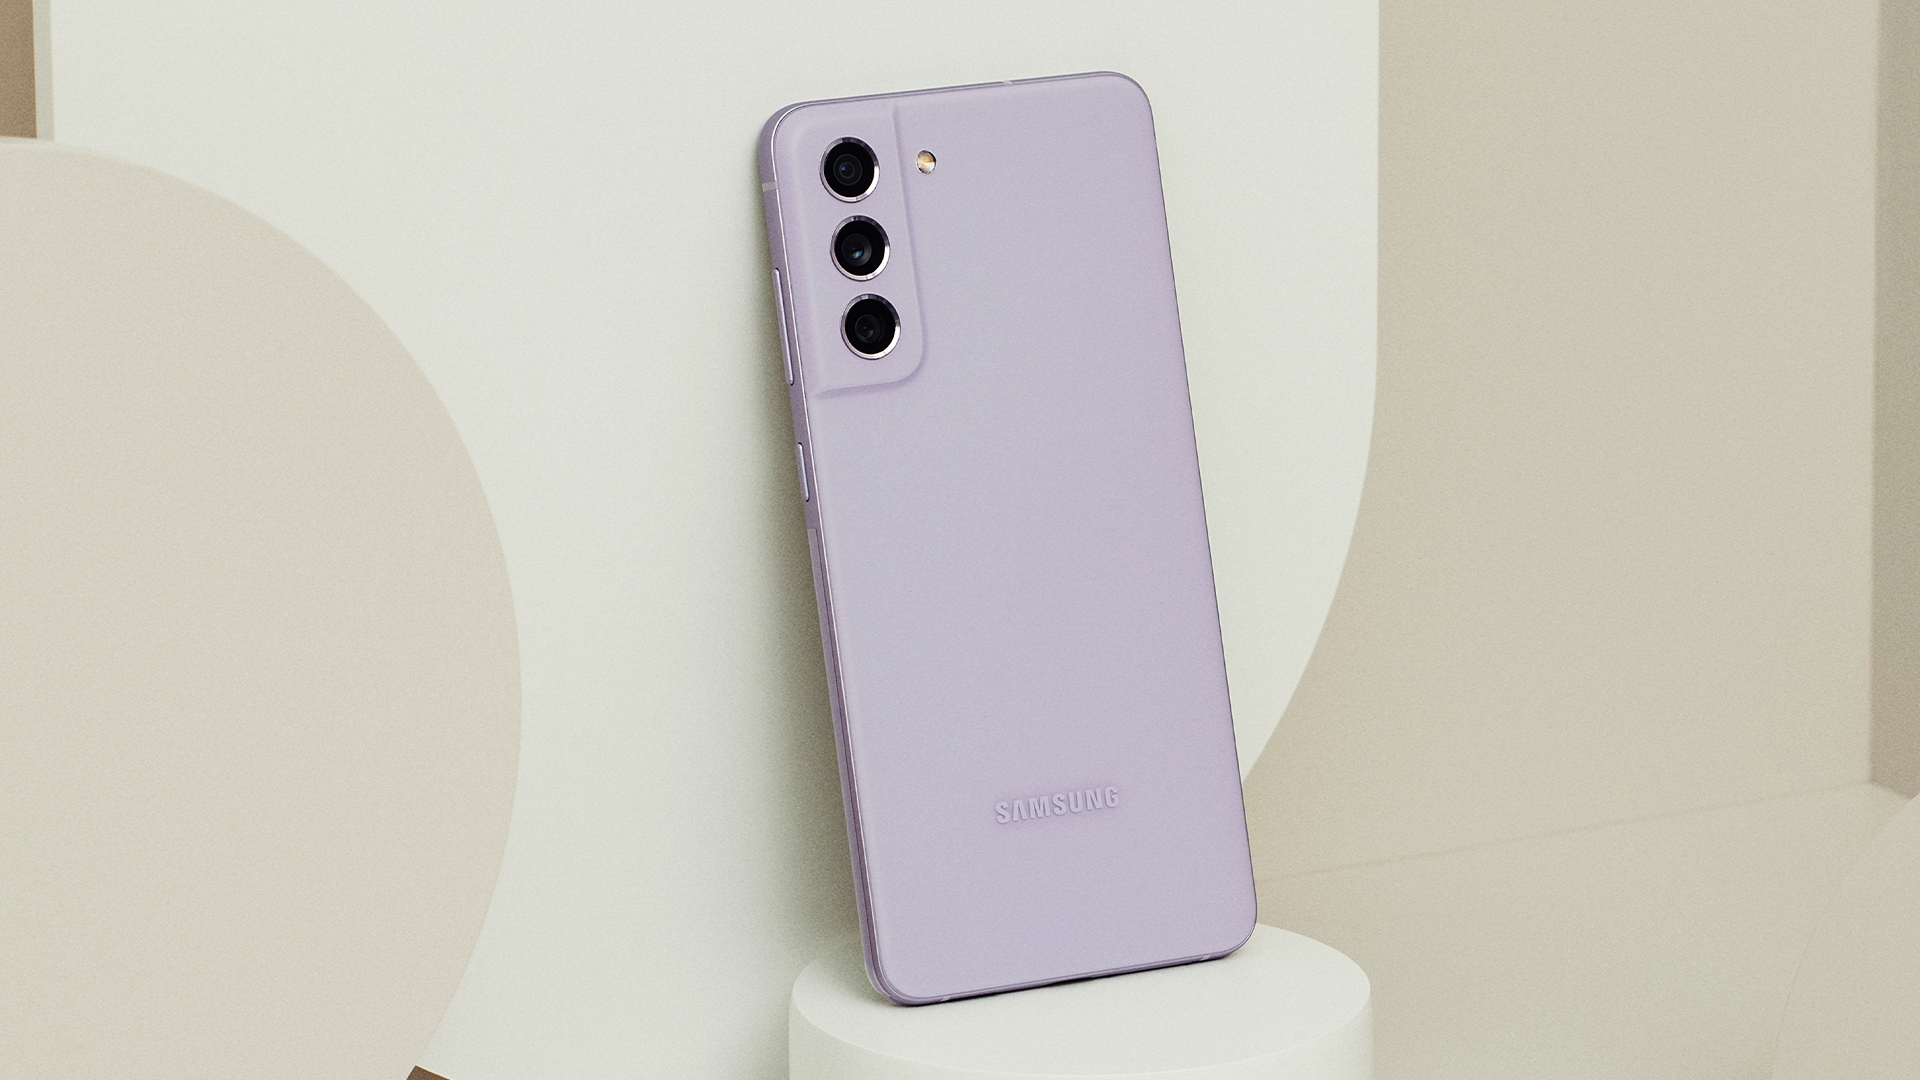 The Samsung Galaxy S21 FE 5G in purple.